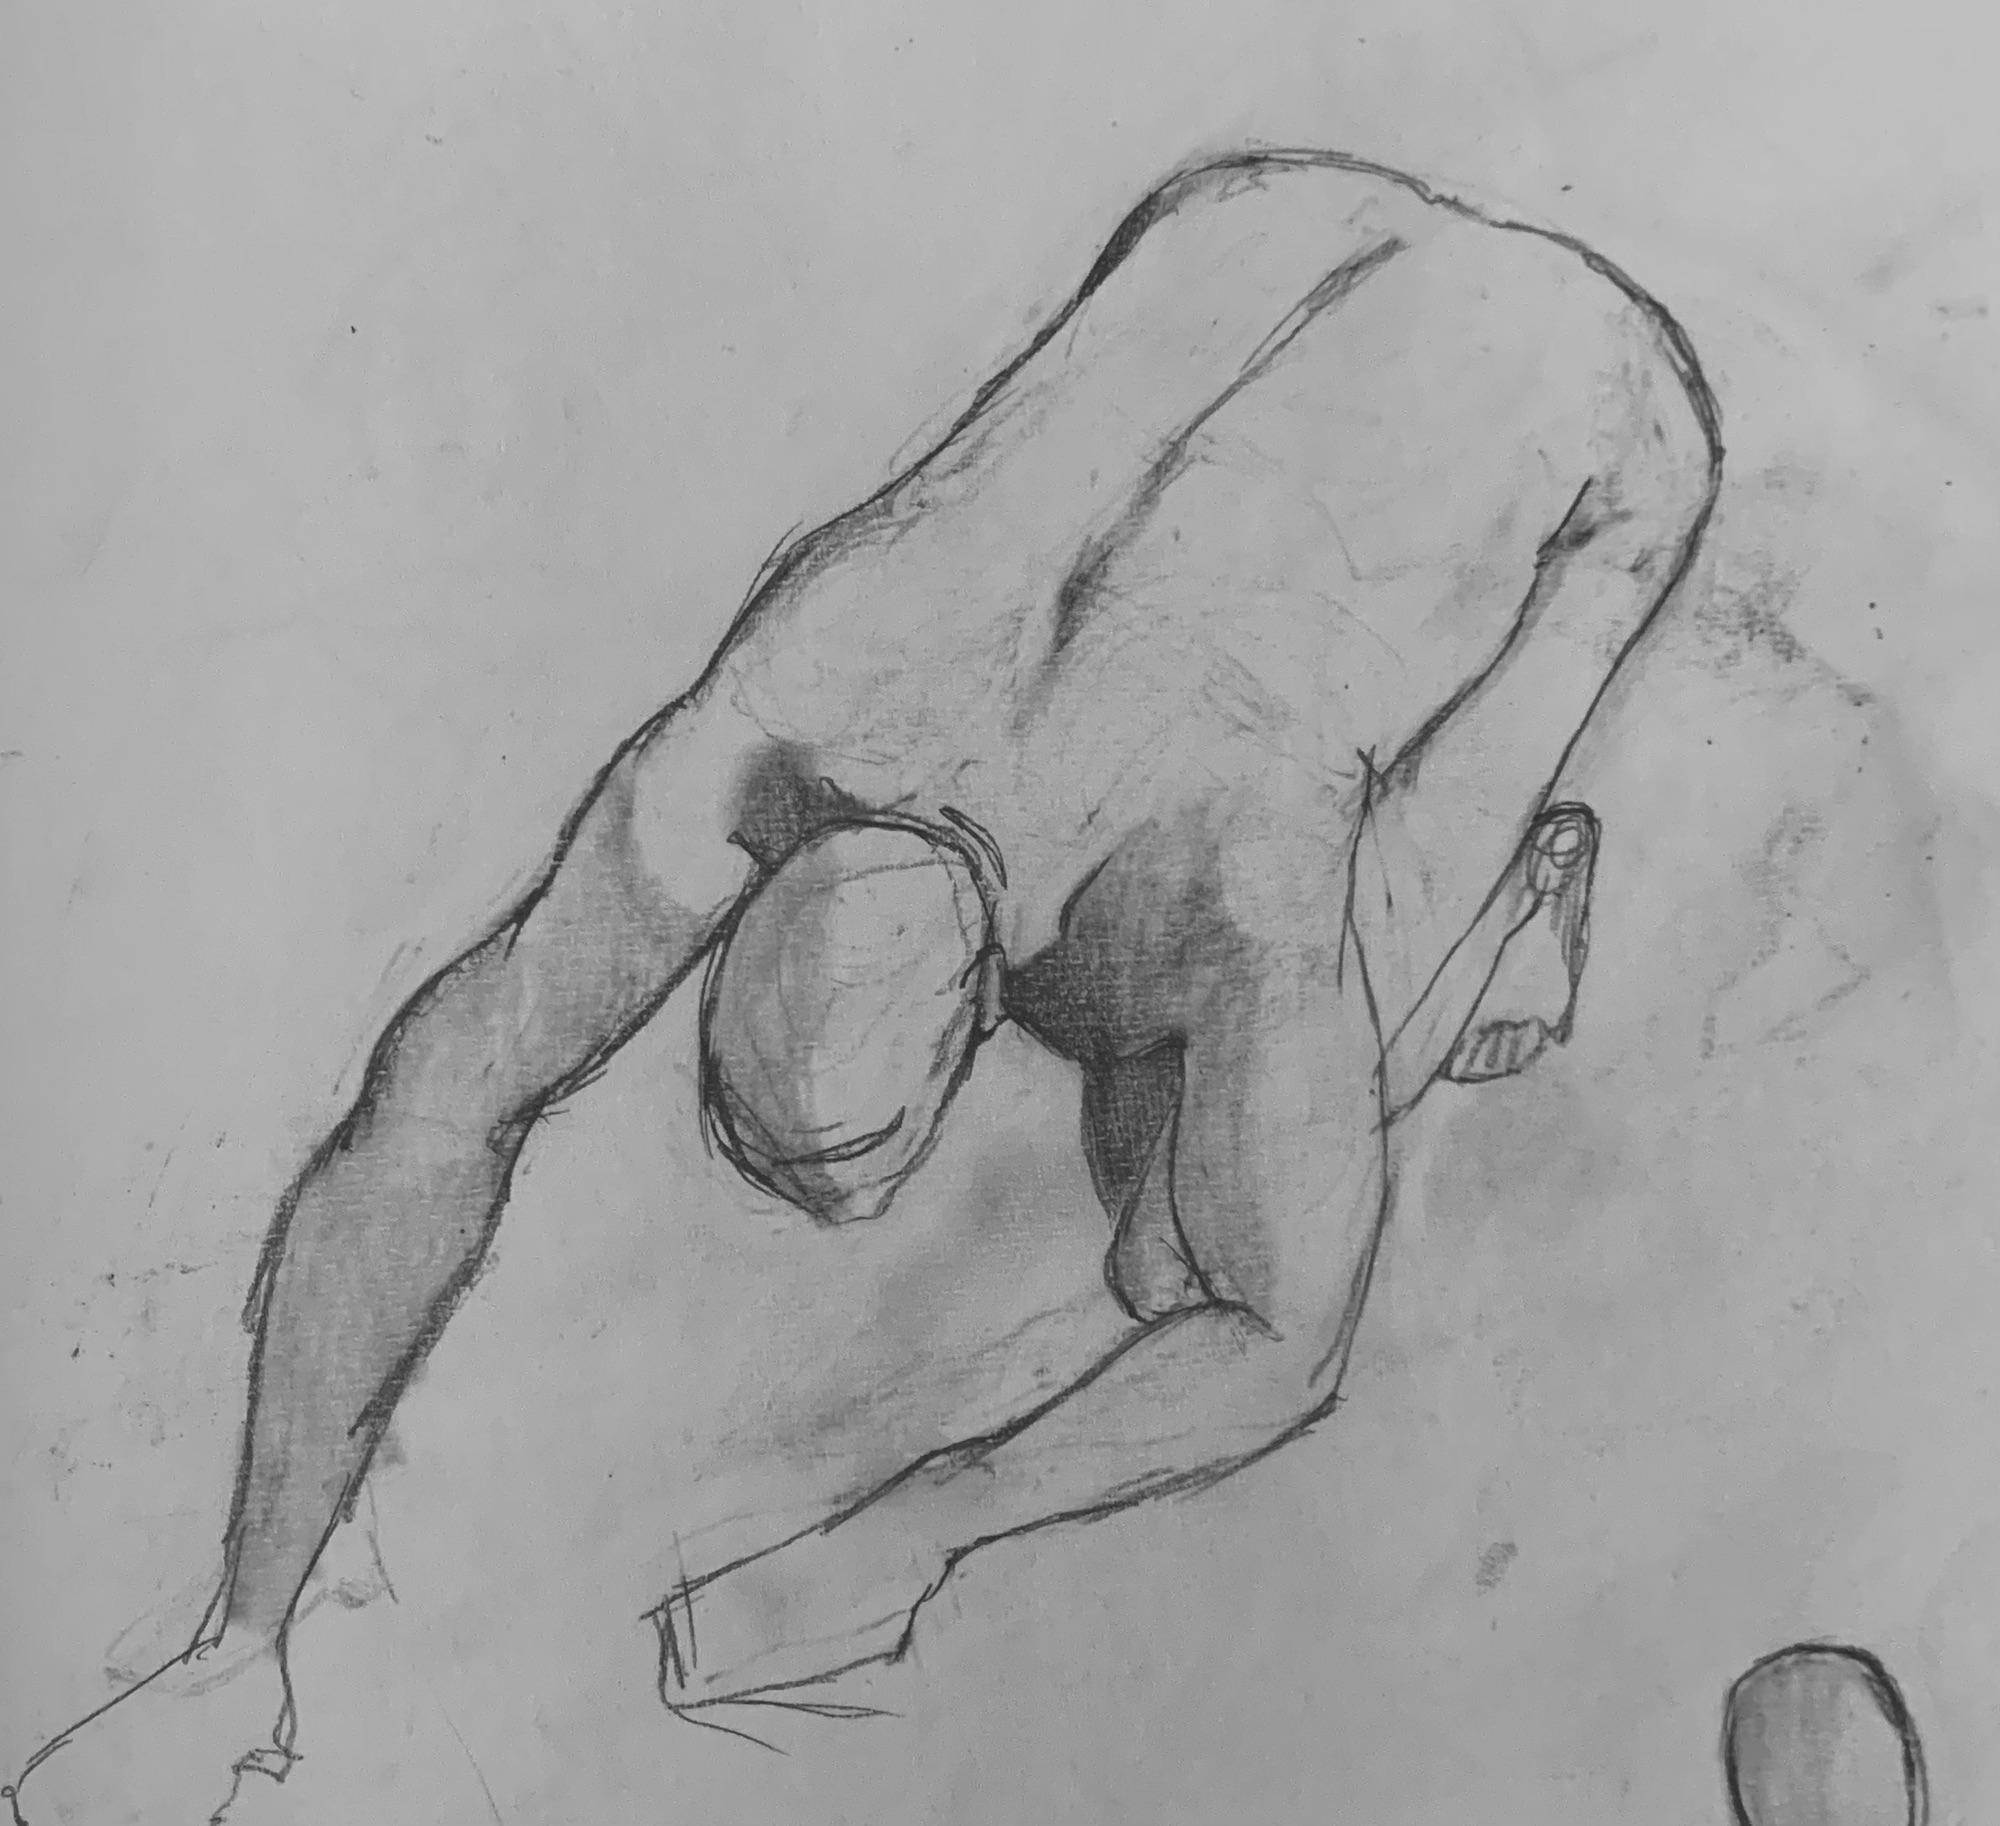 kristina afonso fine art. figure drawing of man kneeling and reaching down